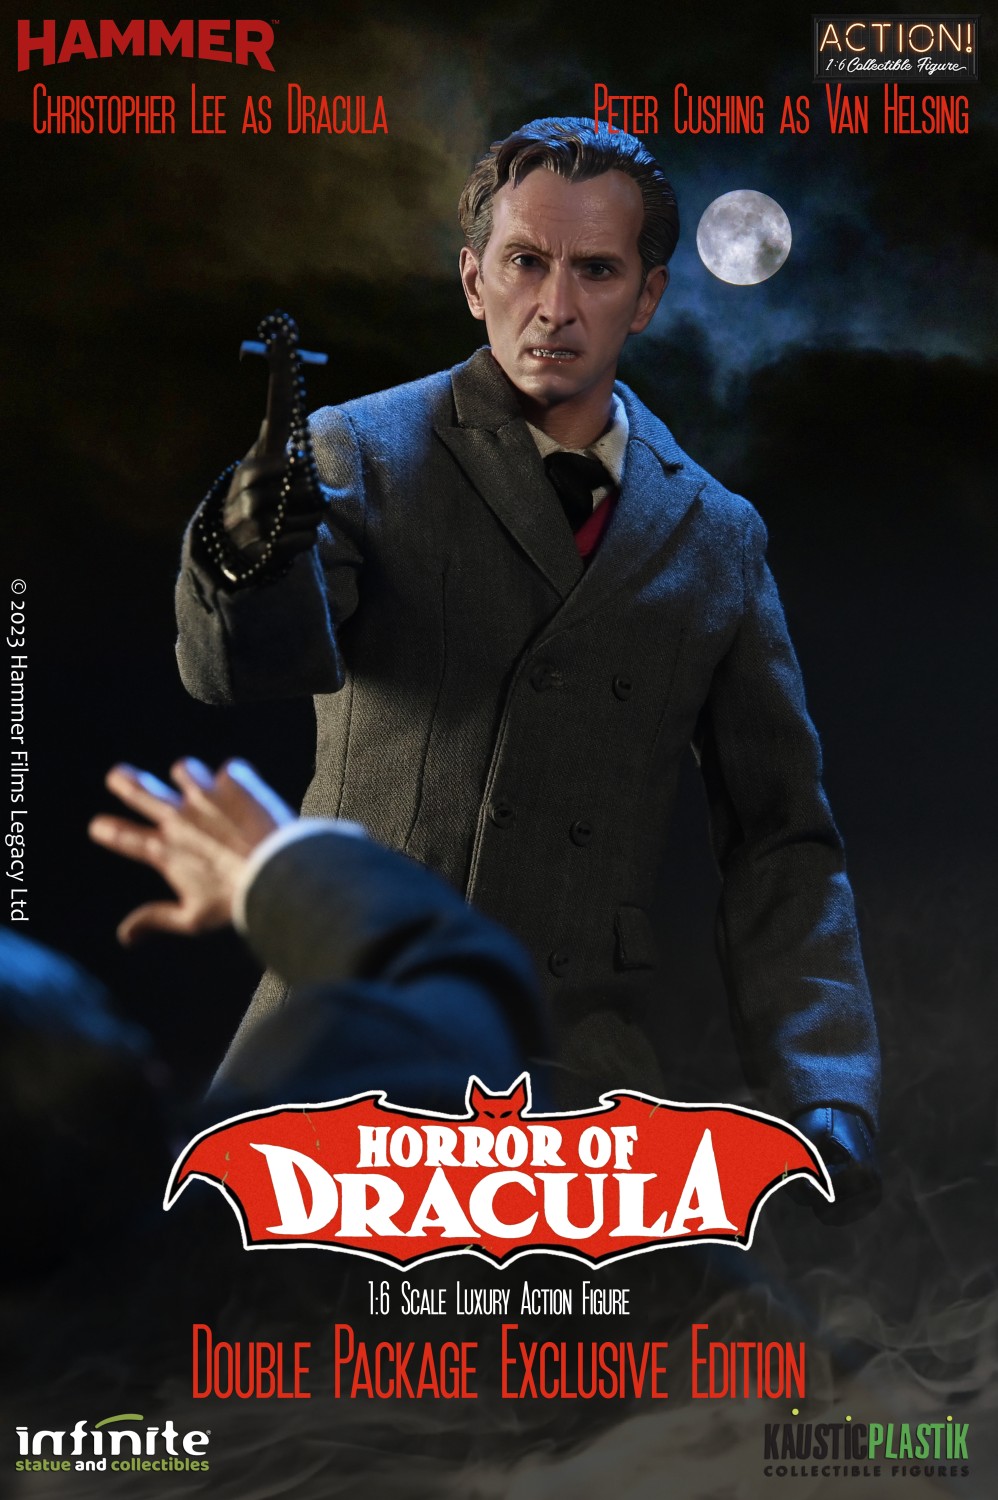 horror - NEW PRODUCT: Kaustic Plastik & Infinite Statue: 1/6 scale Horror Of Dracula: Dracula & Van Helsing action figures 922